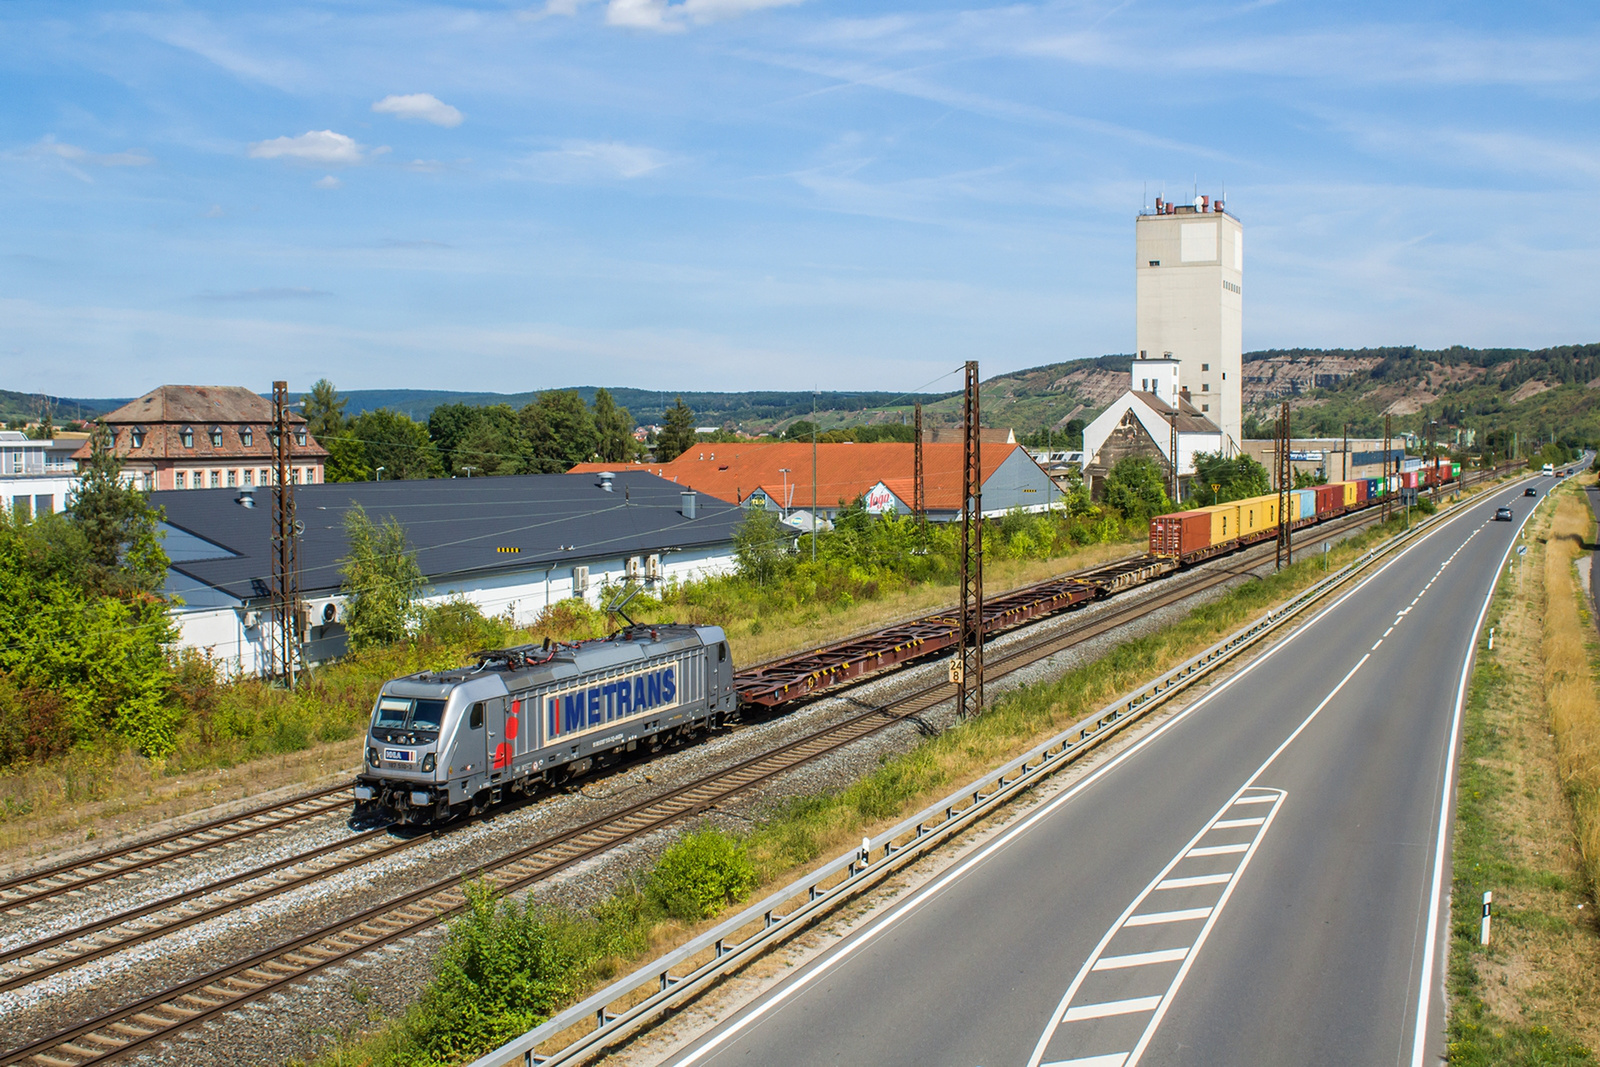 187 510 Karlstadt (2022.08.02)